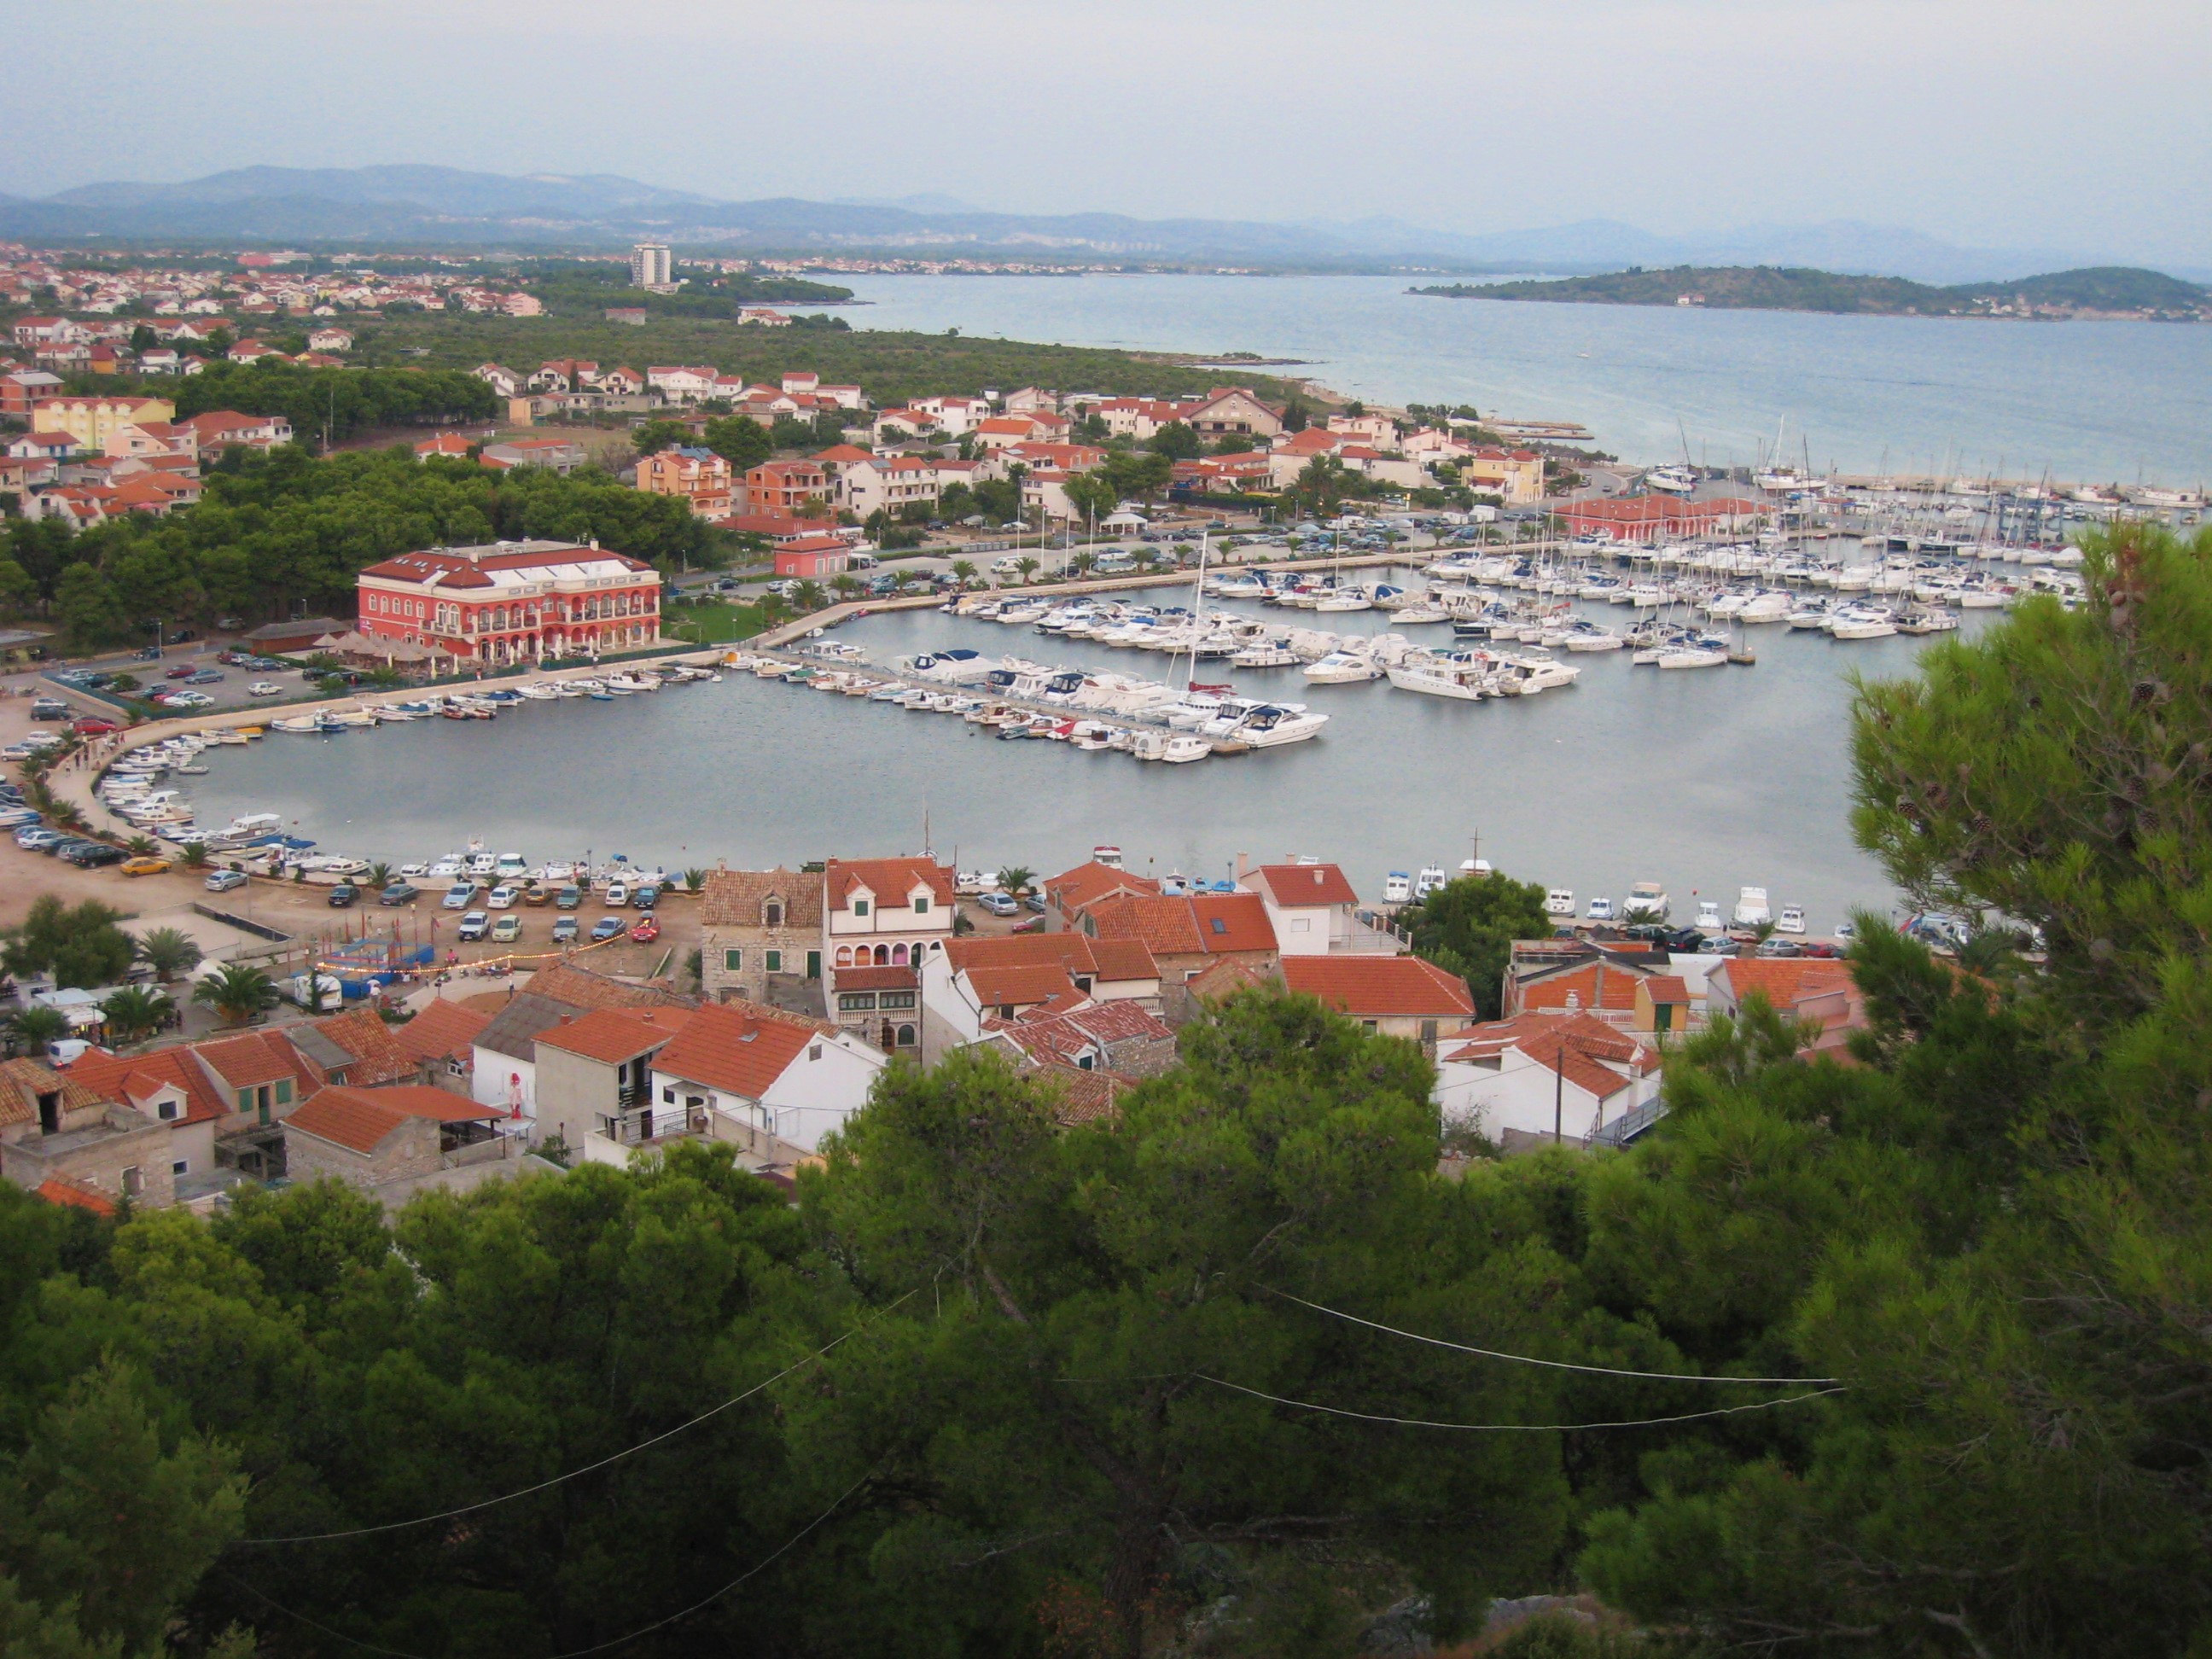 Die besten ACI Marinas in Kroatien